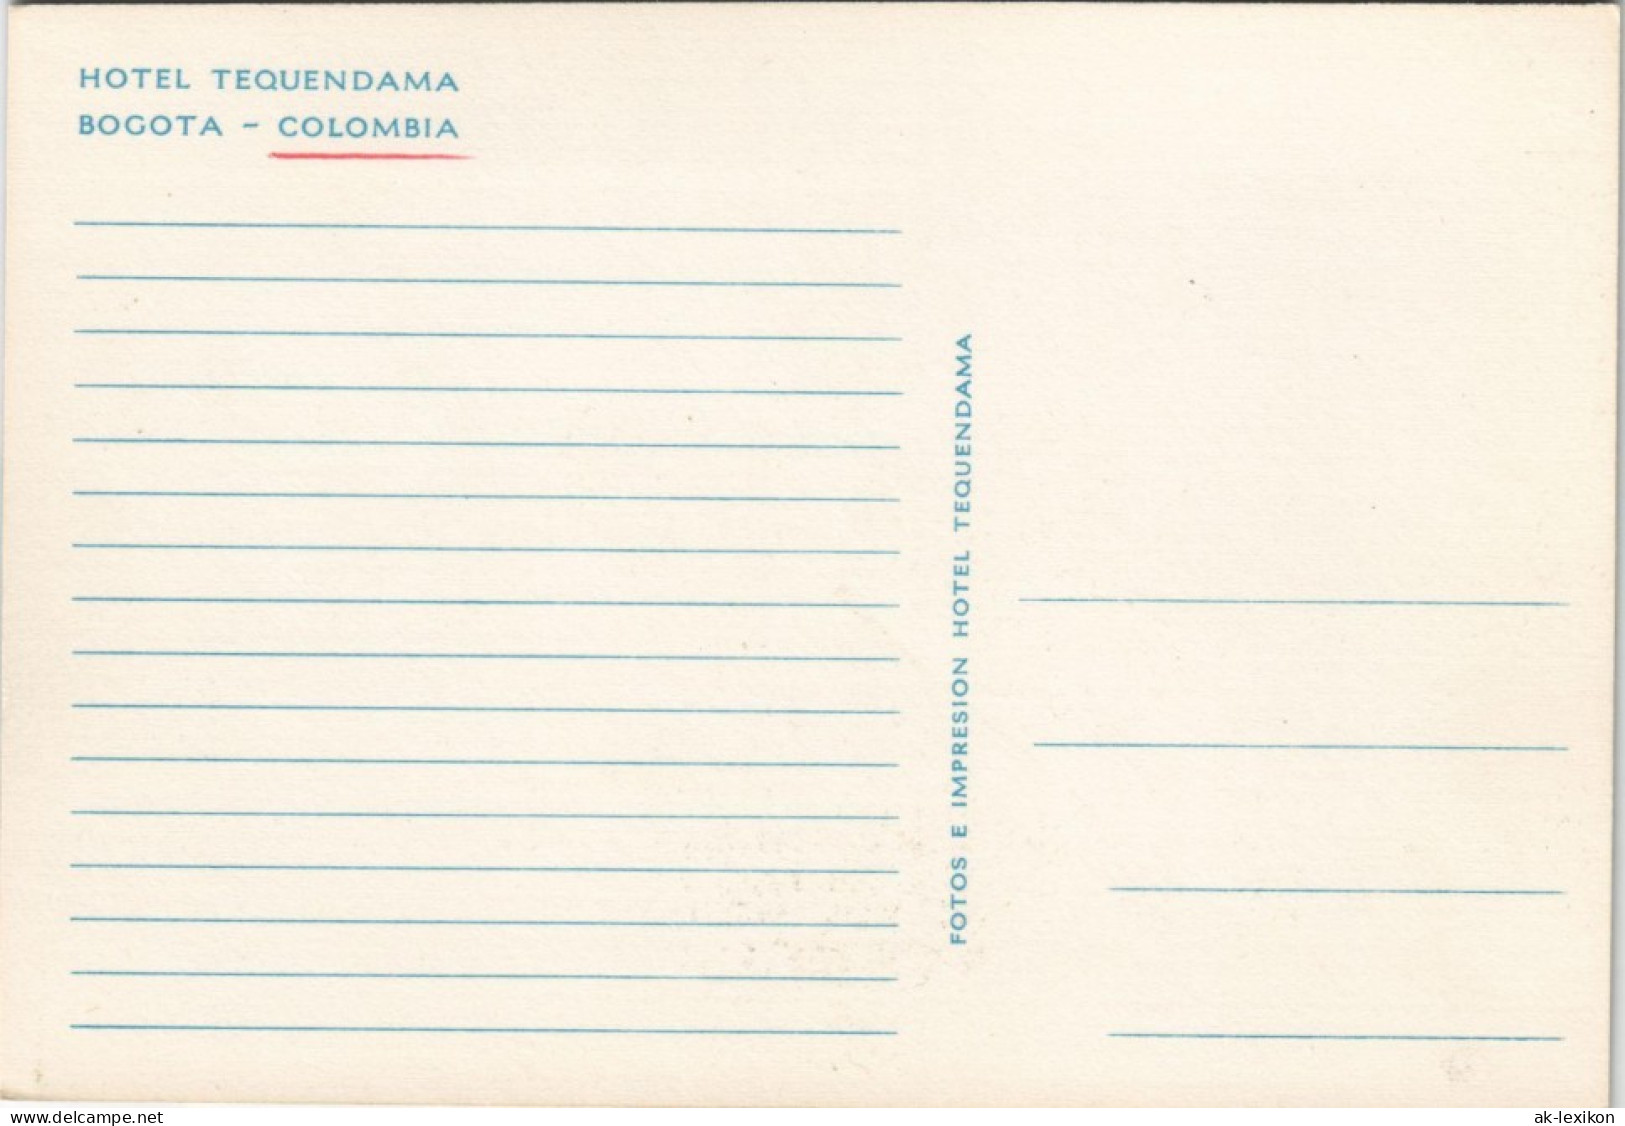 Postcard Bogota HOTEL TEQUENDAMA Stadt-Ansicht Kolumbien Colombia 1960 - Colombia